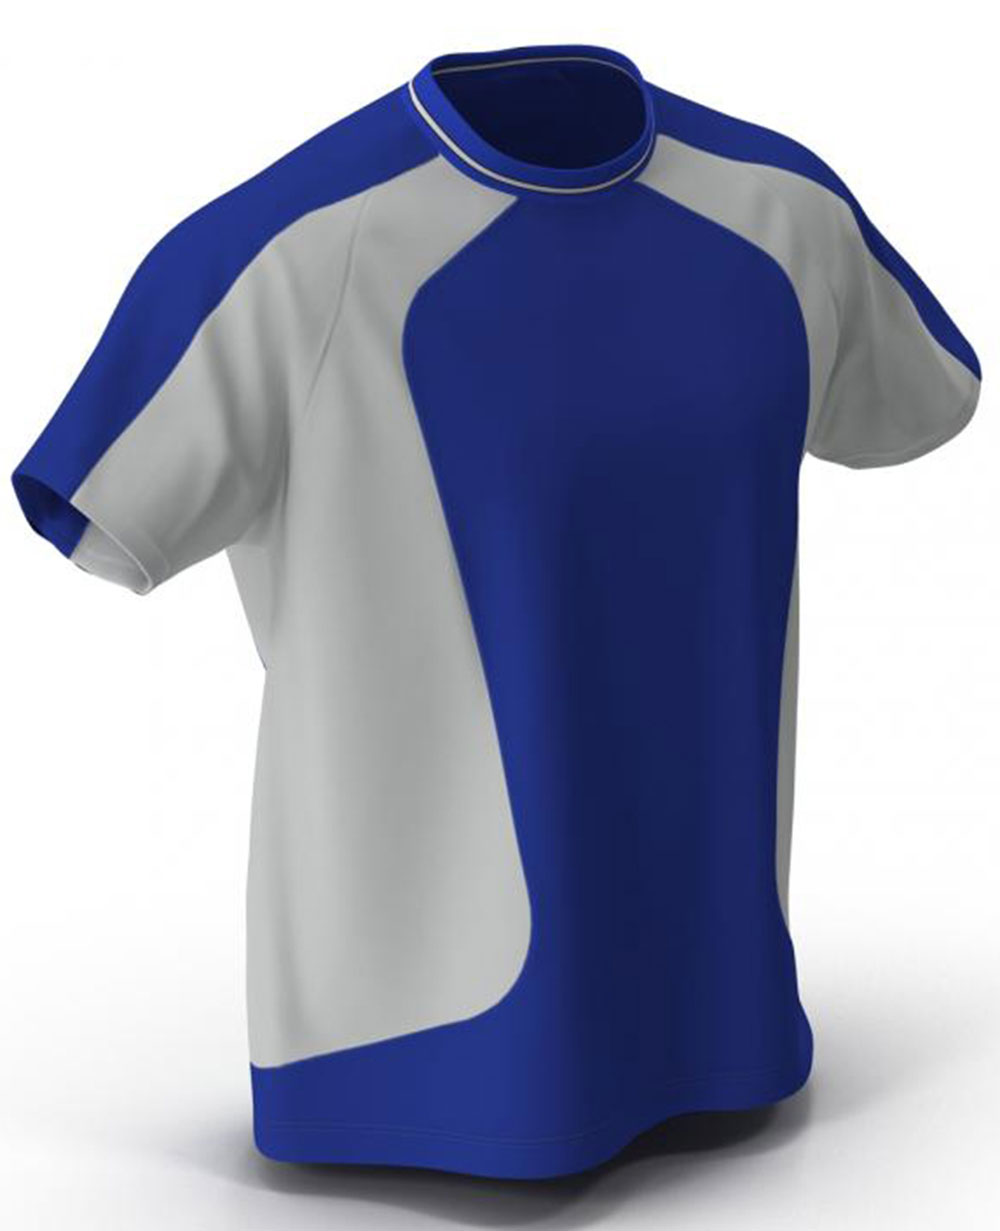 Soccer-Uniform-Blue